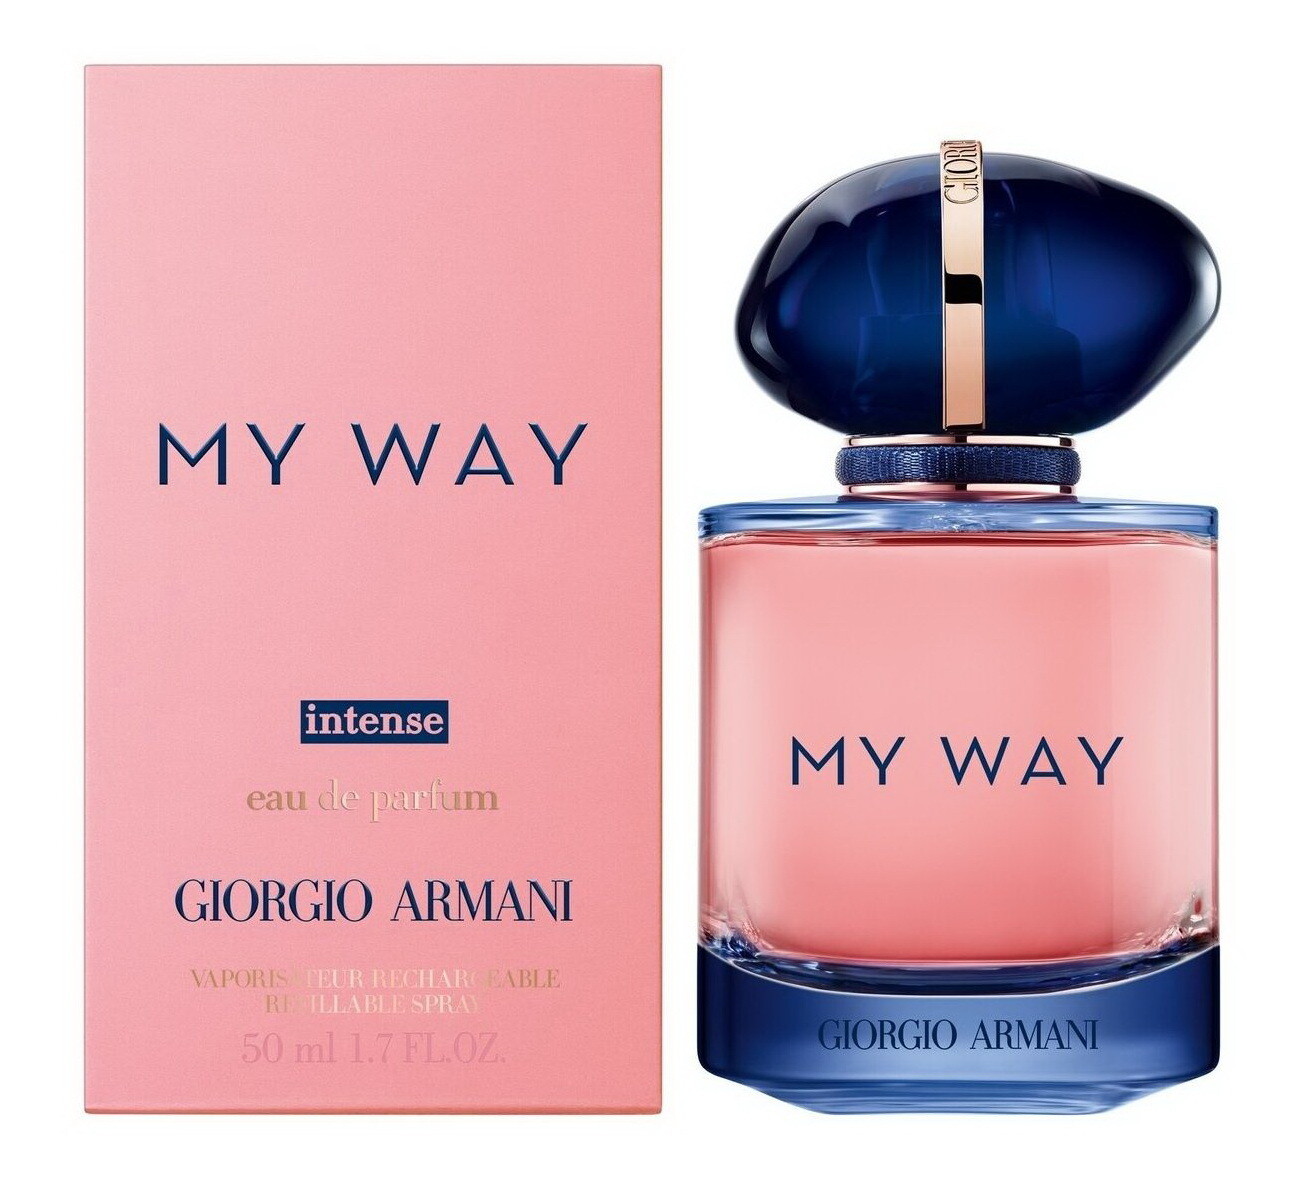 My Way Intense - Giorgio Armani